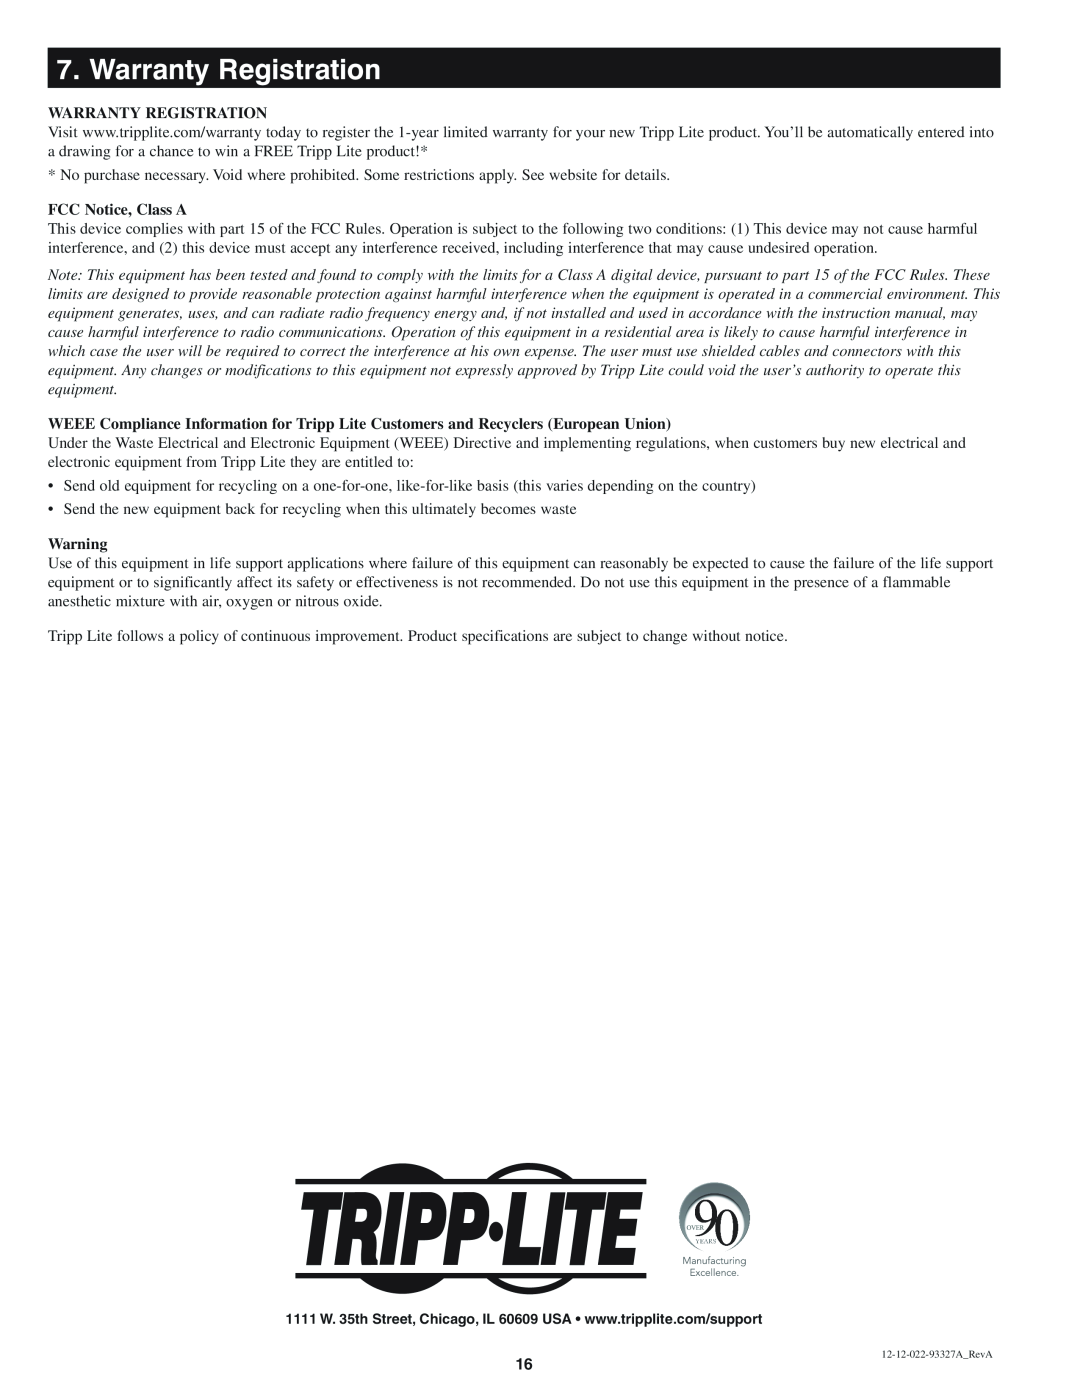 Tripp Lite B022-U08-IP quick start Warranty Registration, FCC Notice, Class A 